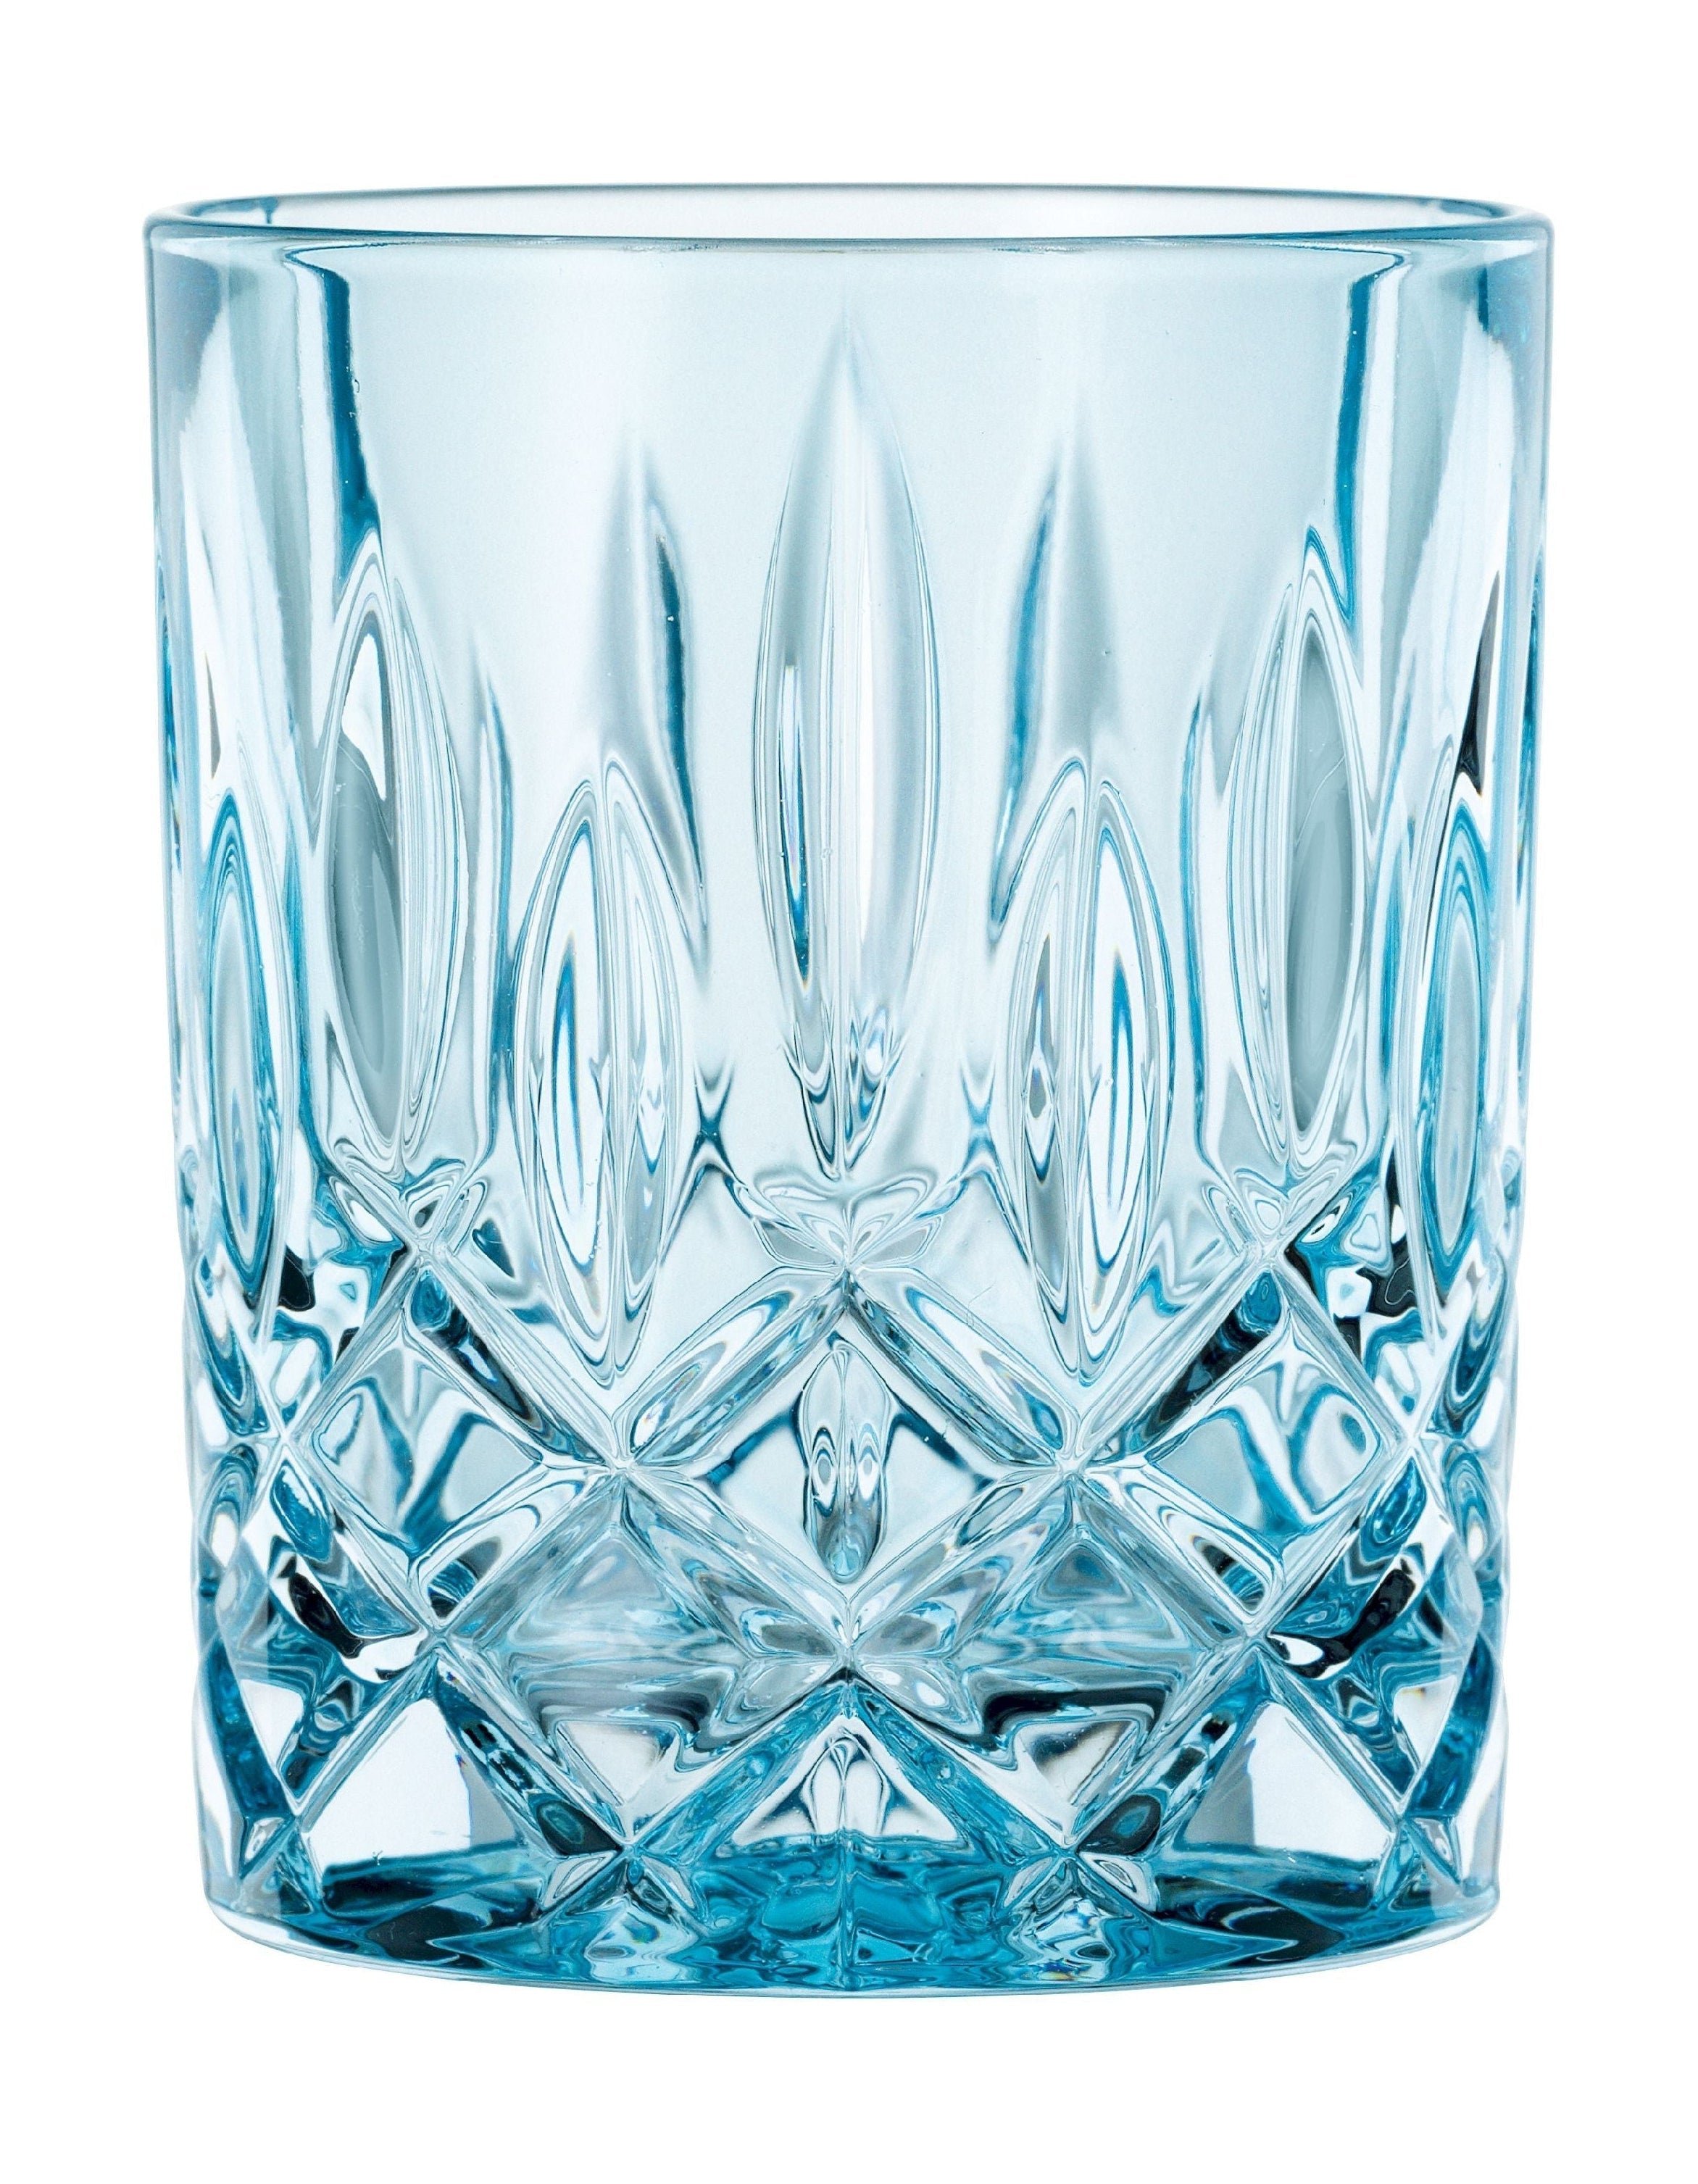 Nachtmann Noblesse Whisky Glass Aqua 295 ml, set di 2